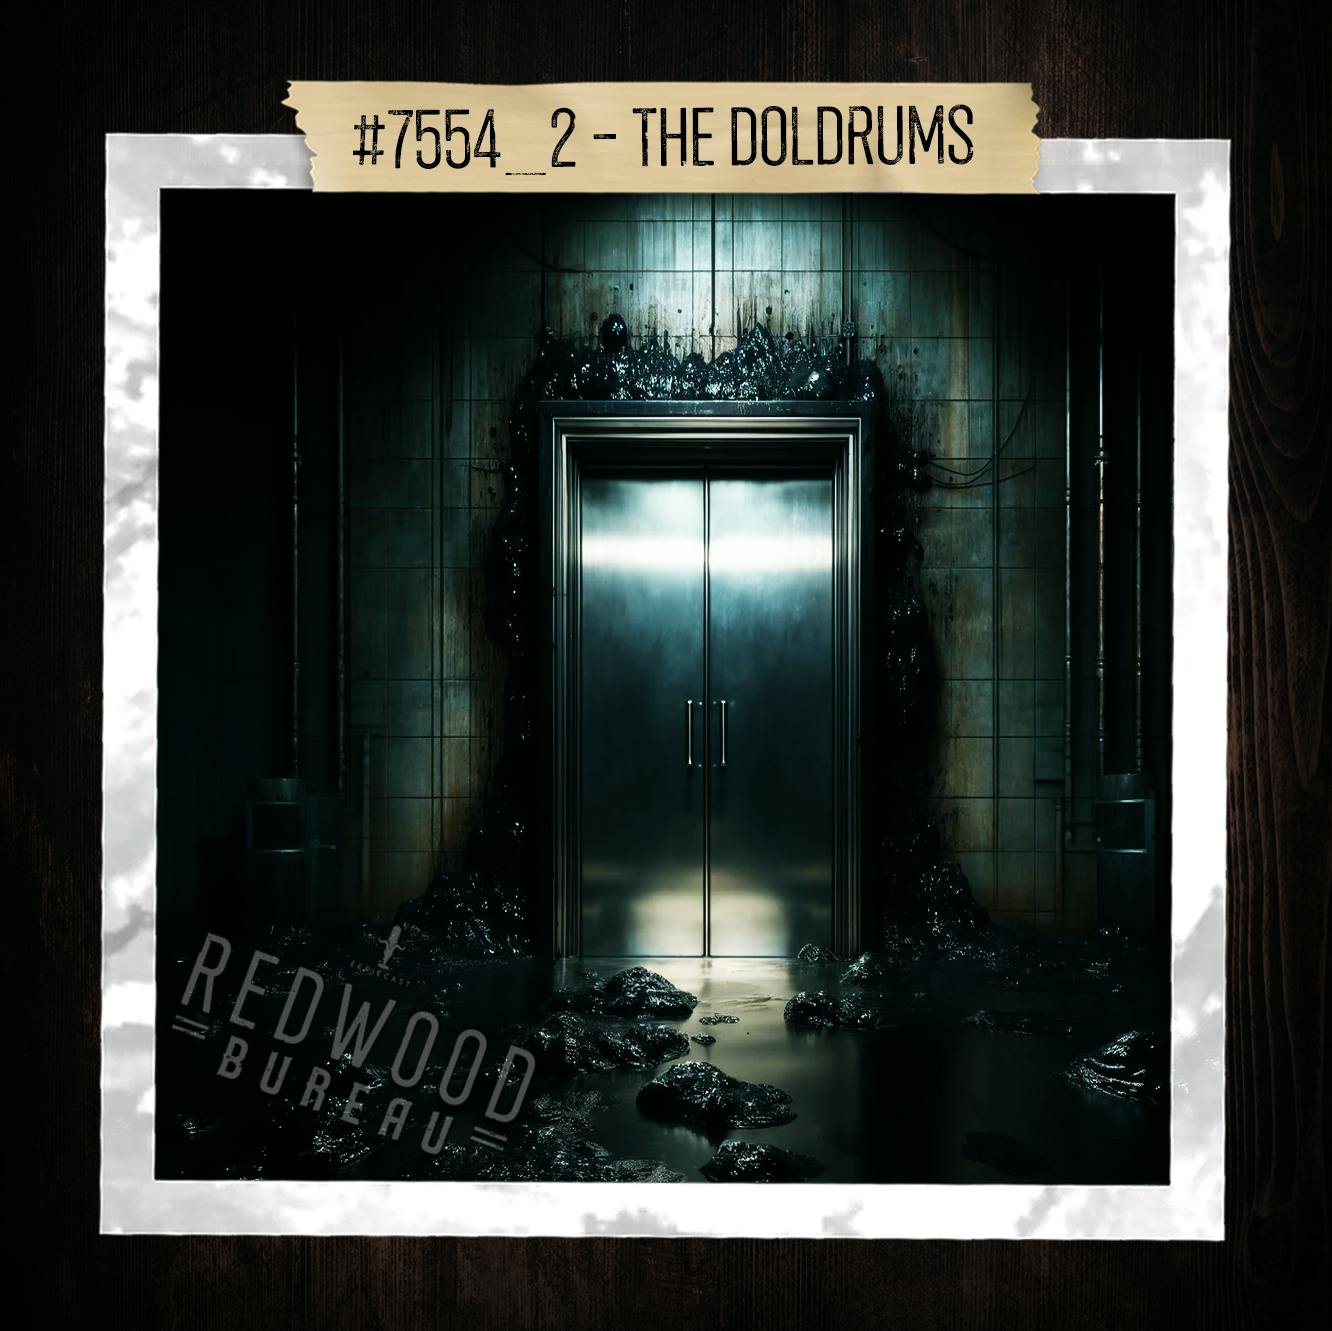 "THE DOLDRUMS" - Redwood Bureau Phenomenon #7554_2